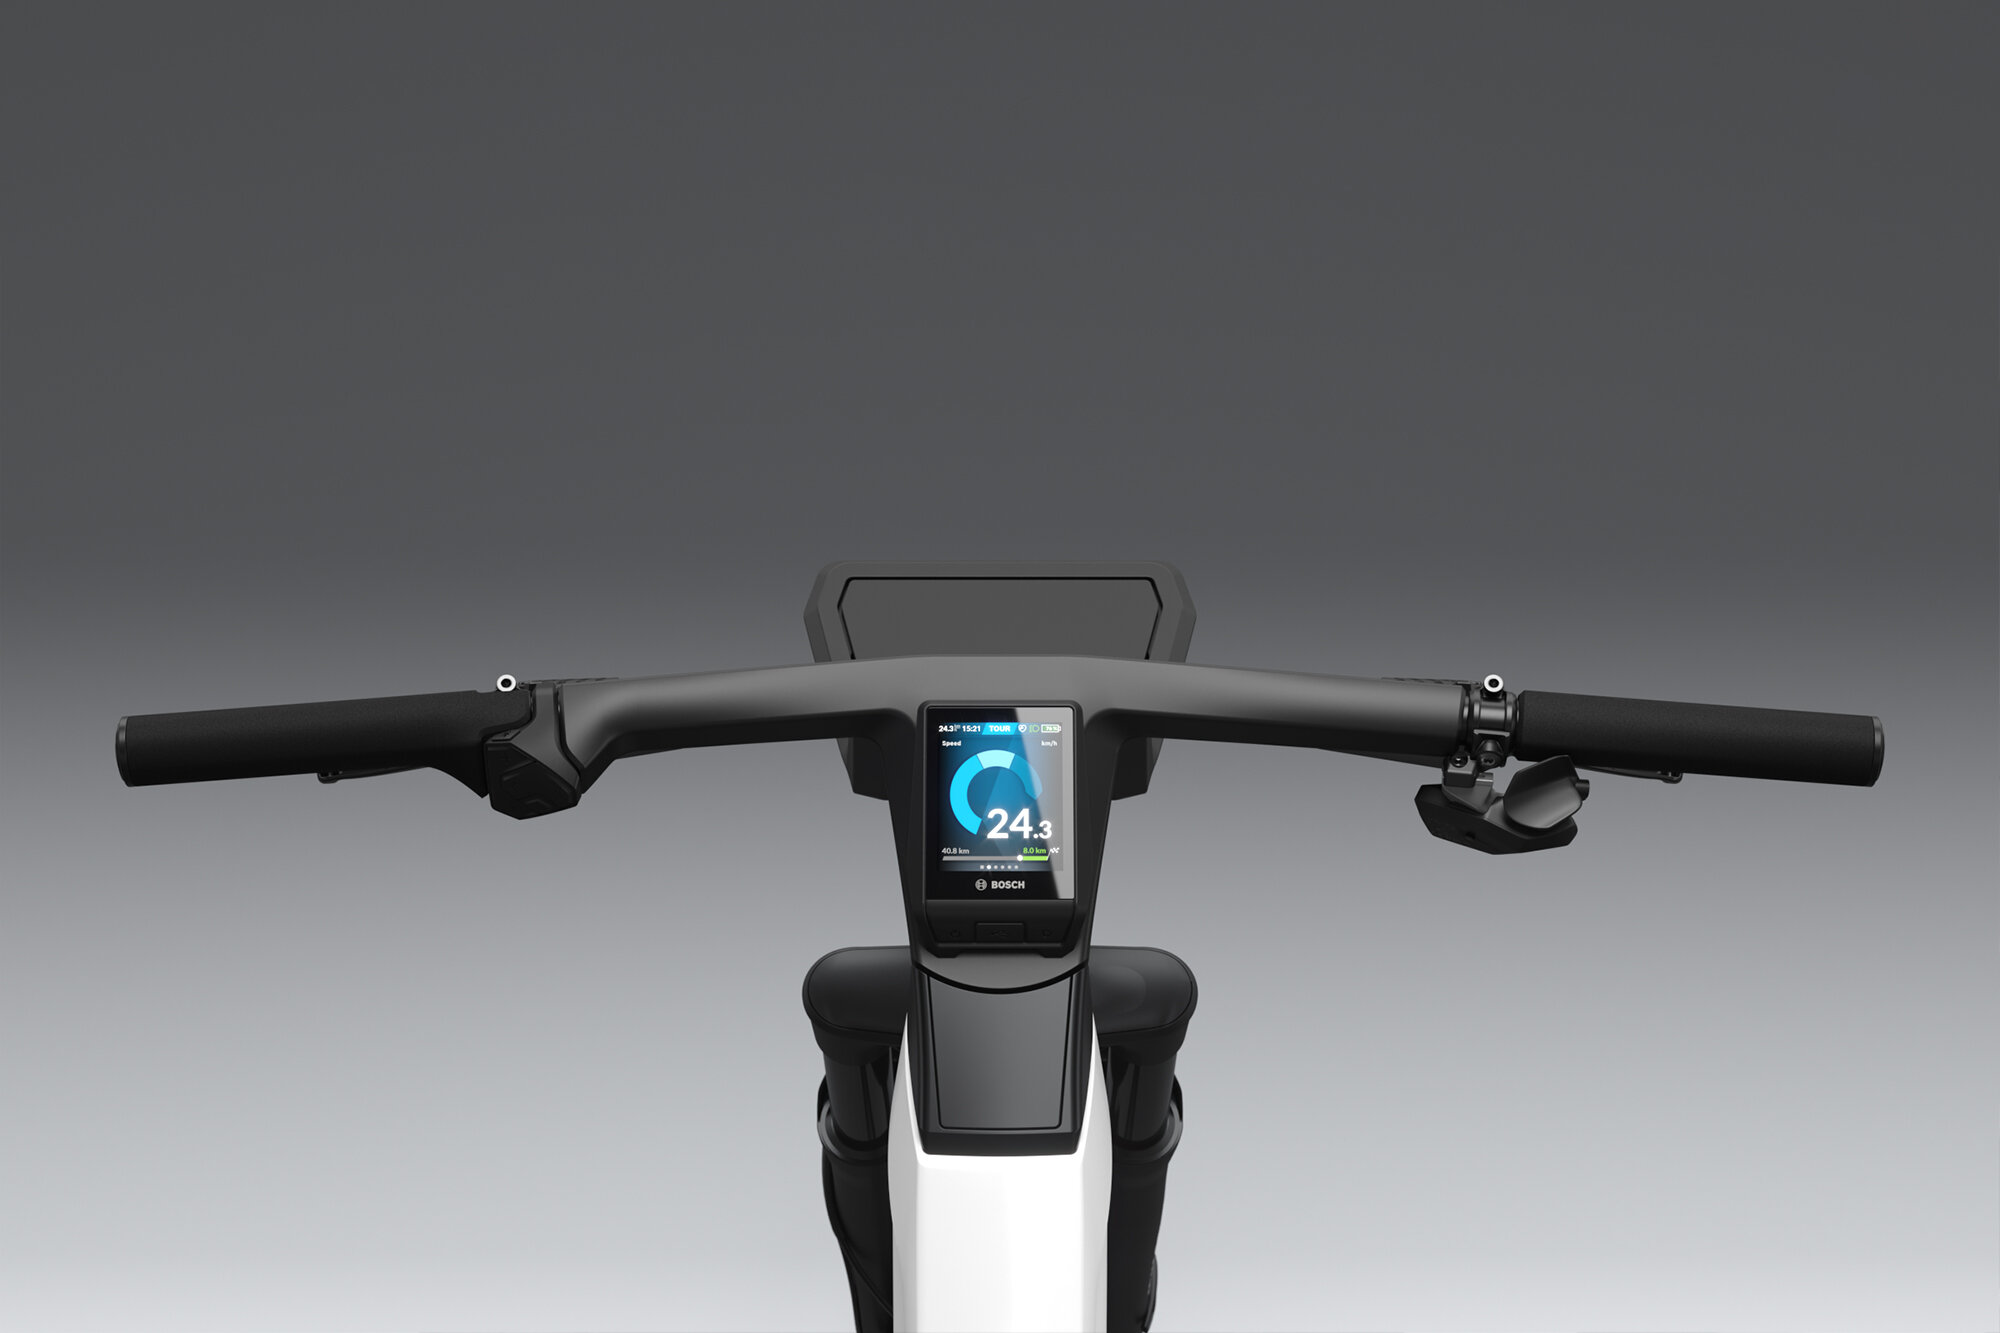 Bosch introduces its concept bike 'eBike Design Vision'